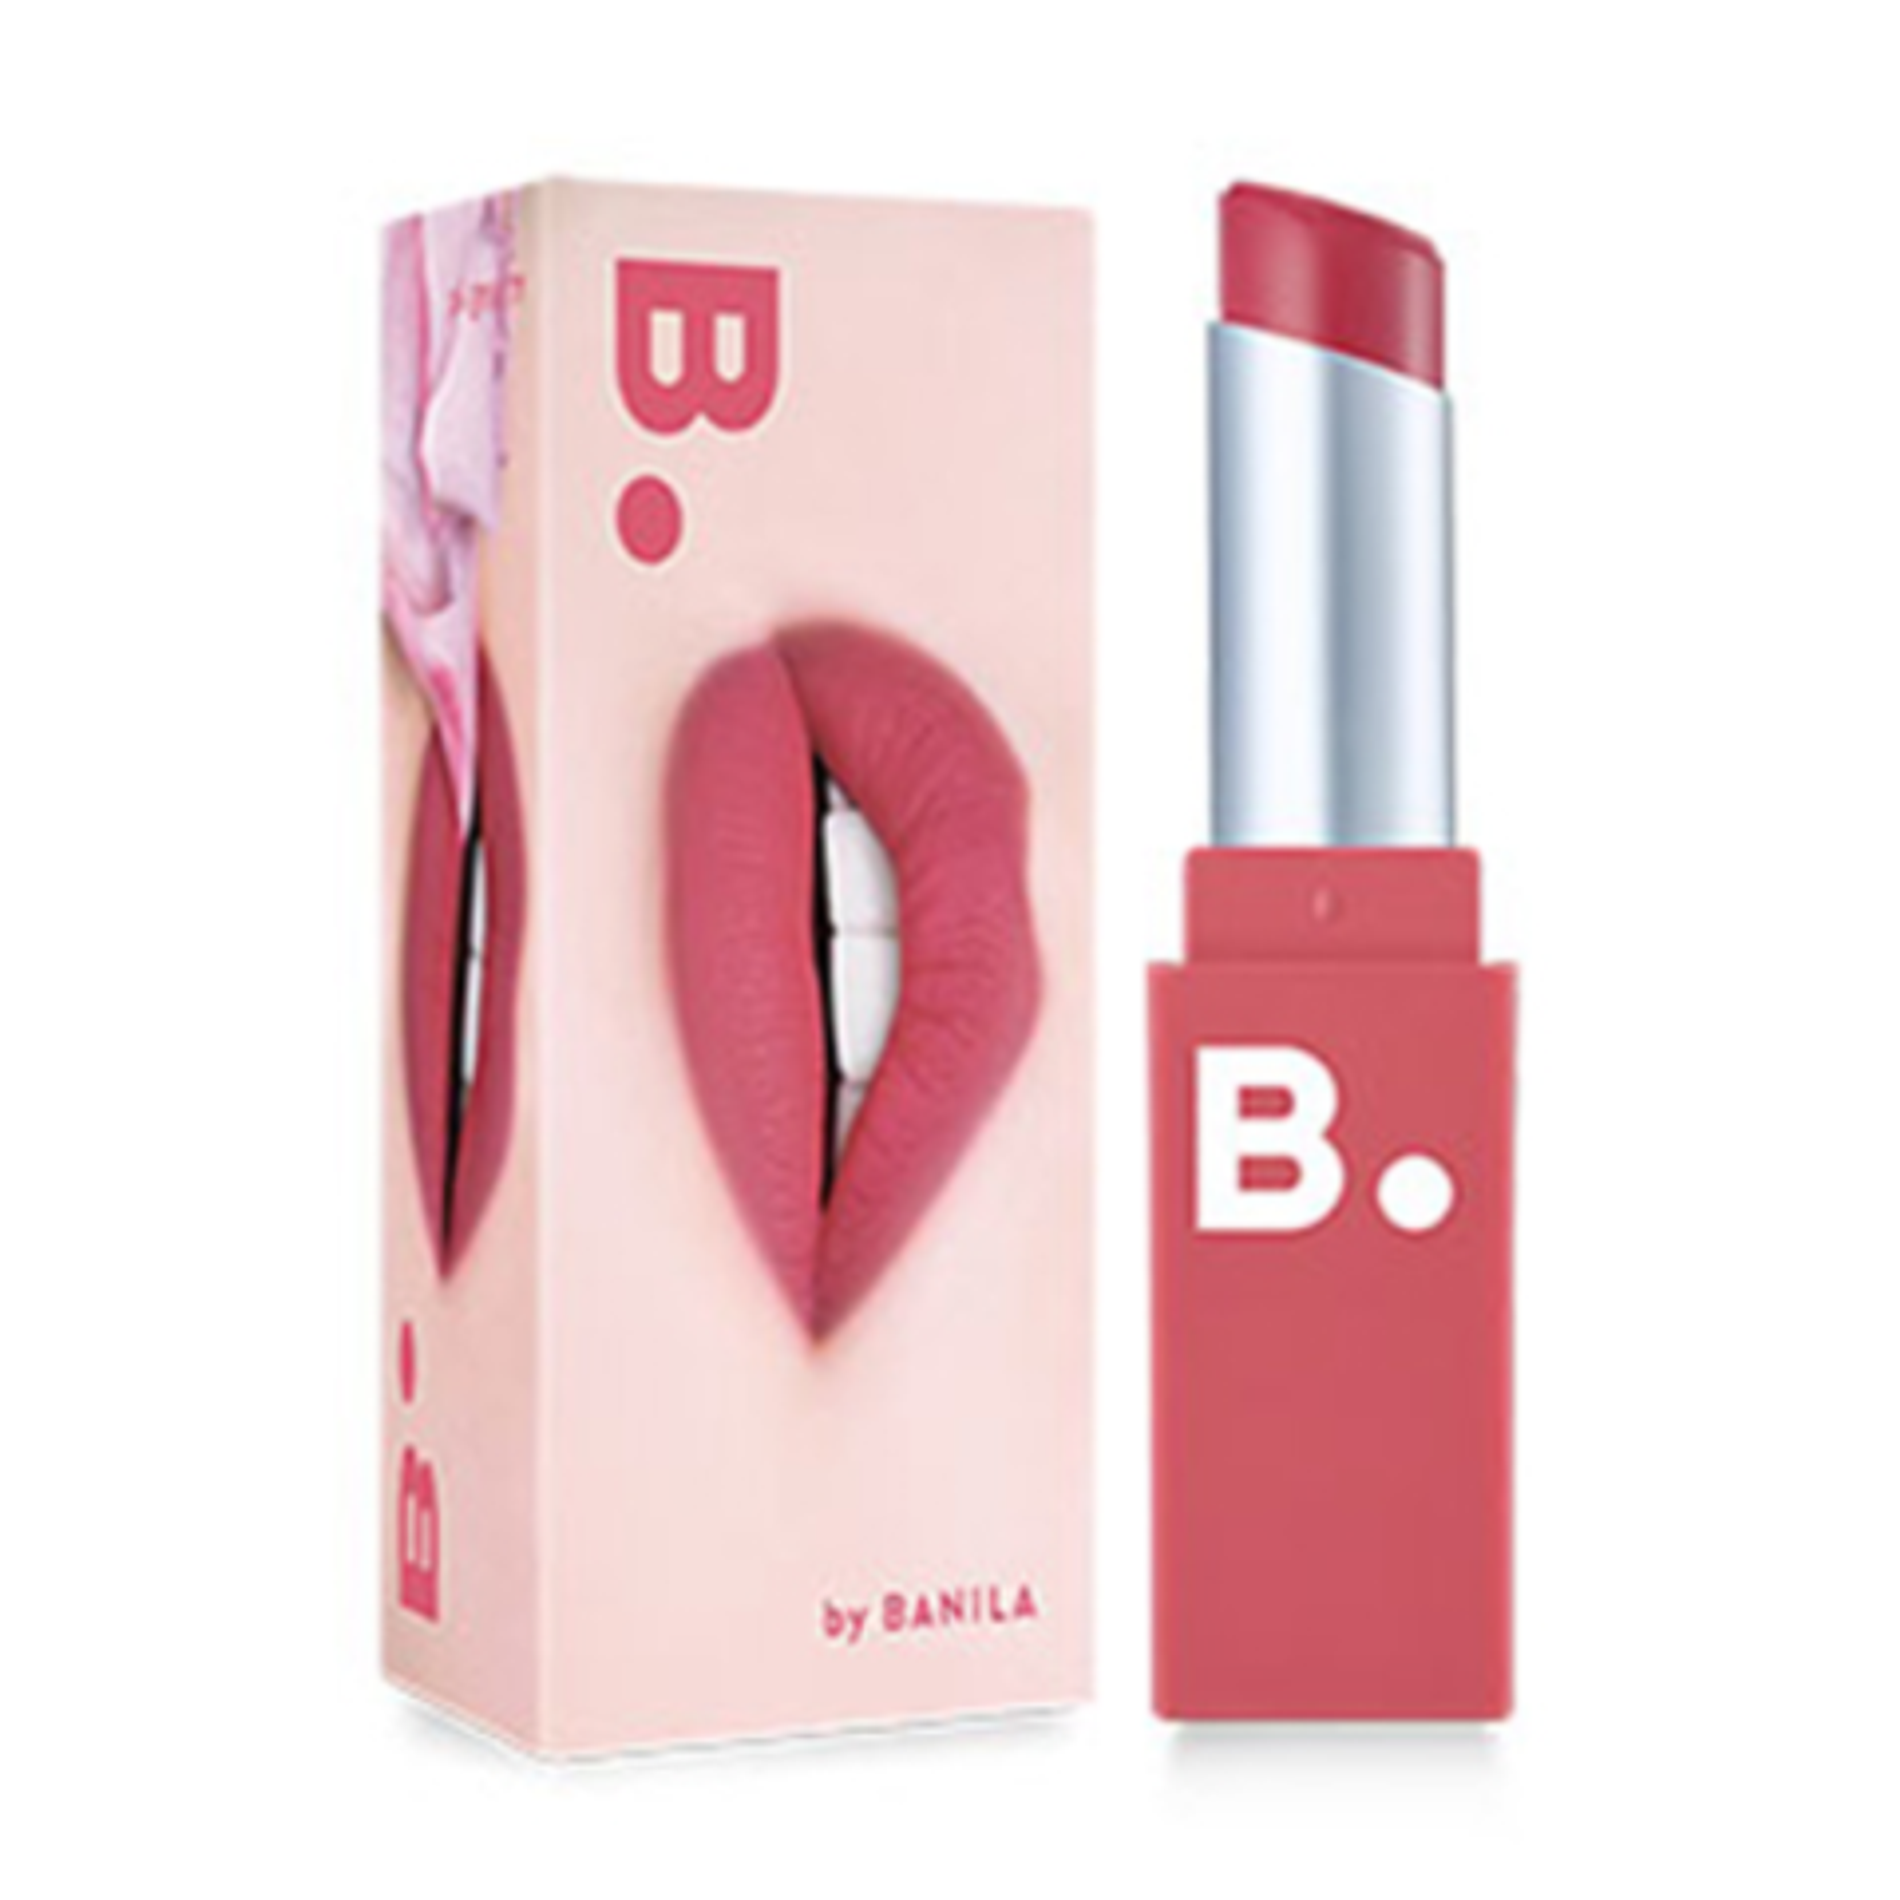 gift-son-moi-b-by-banila-lipdraw-matte-blast-lipstick-mpk06-so-rosy-4-2g-2